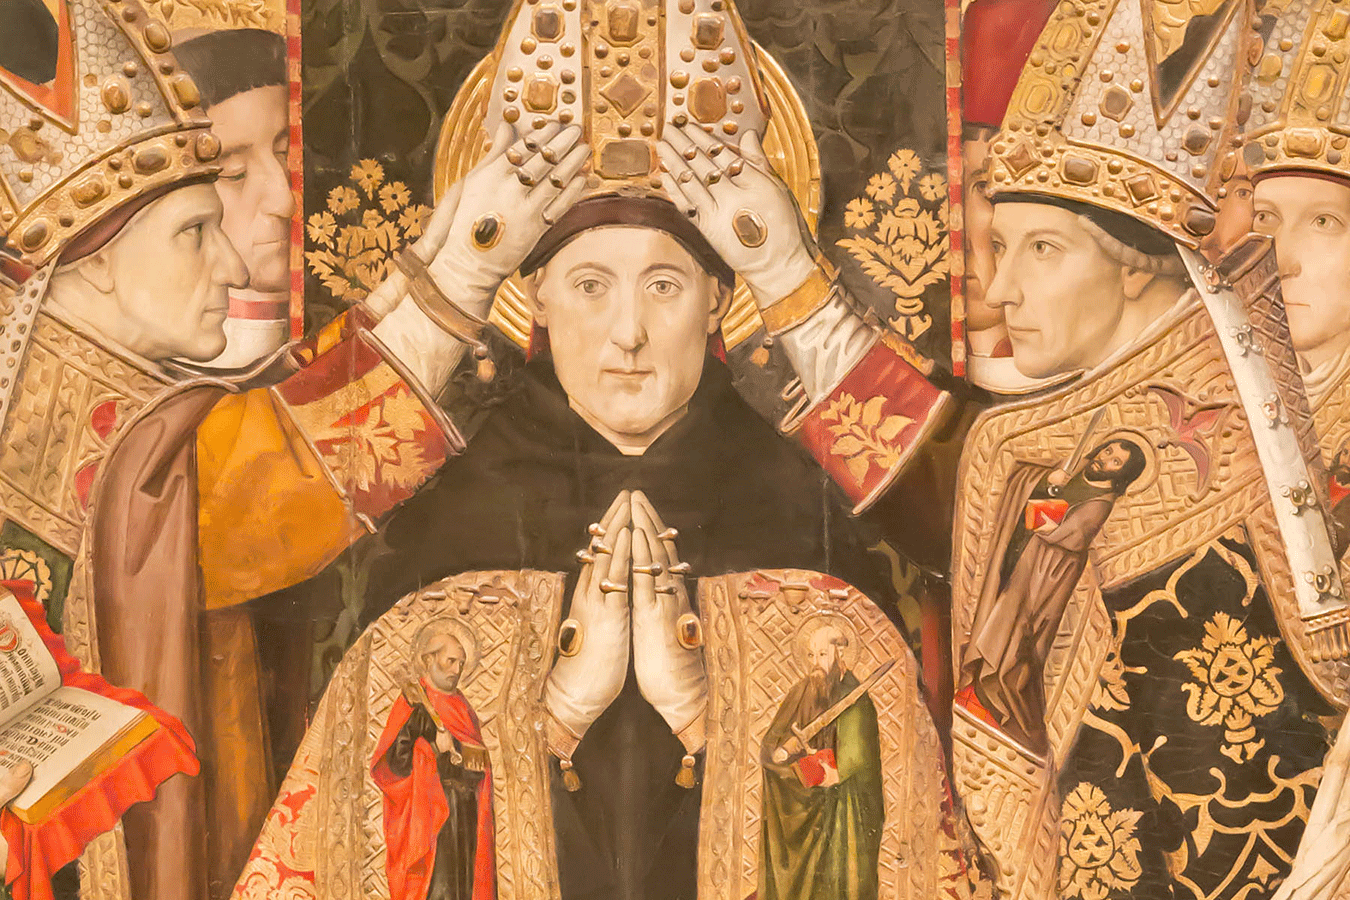 The santification of Saint Augustine